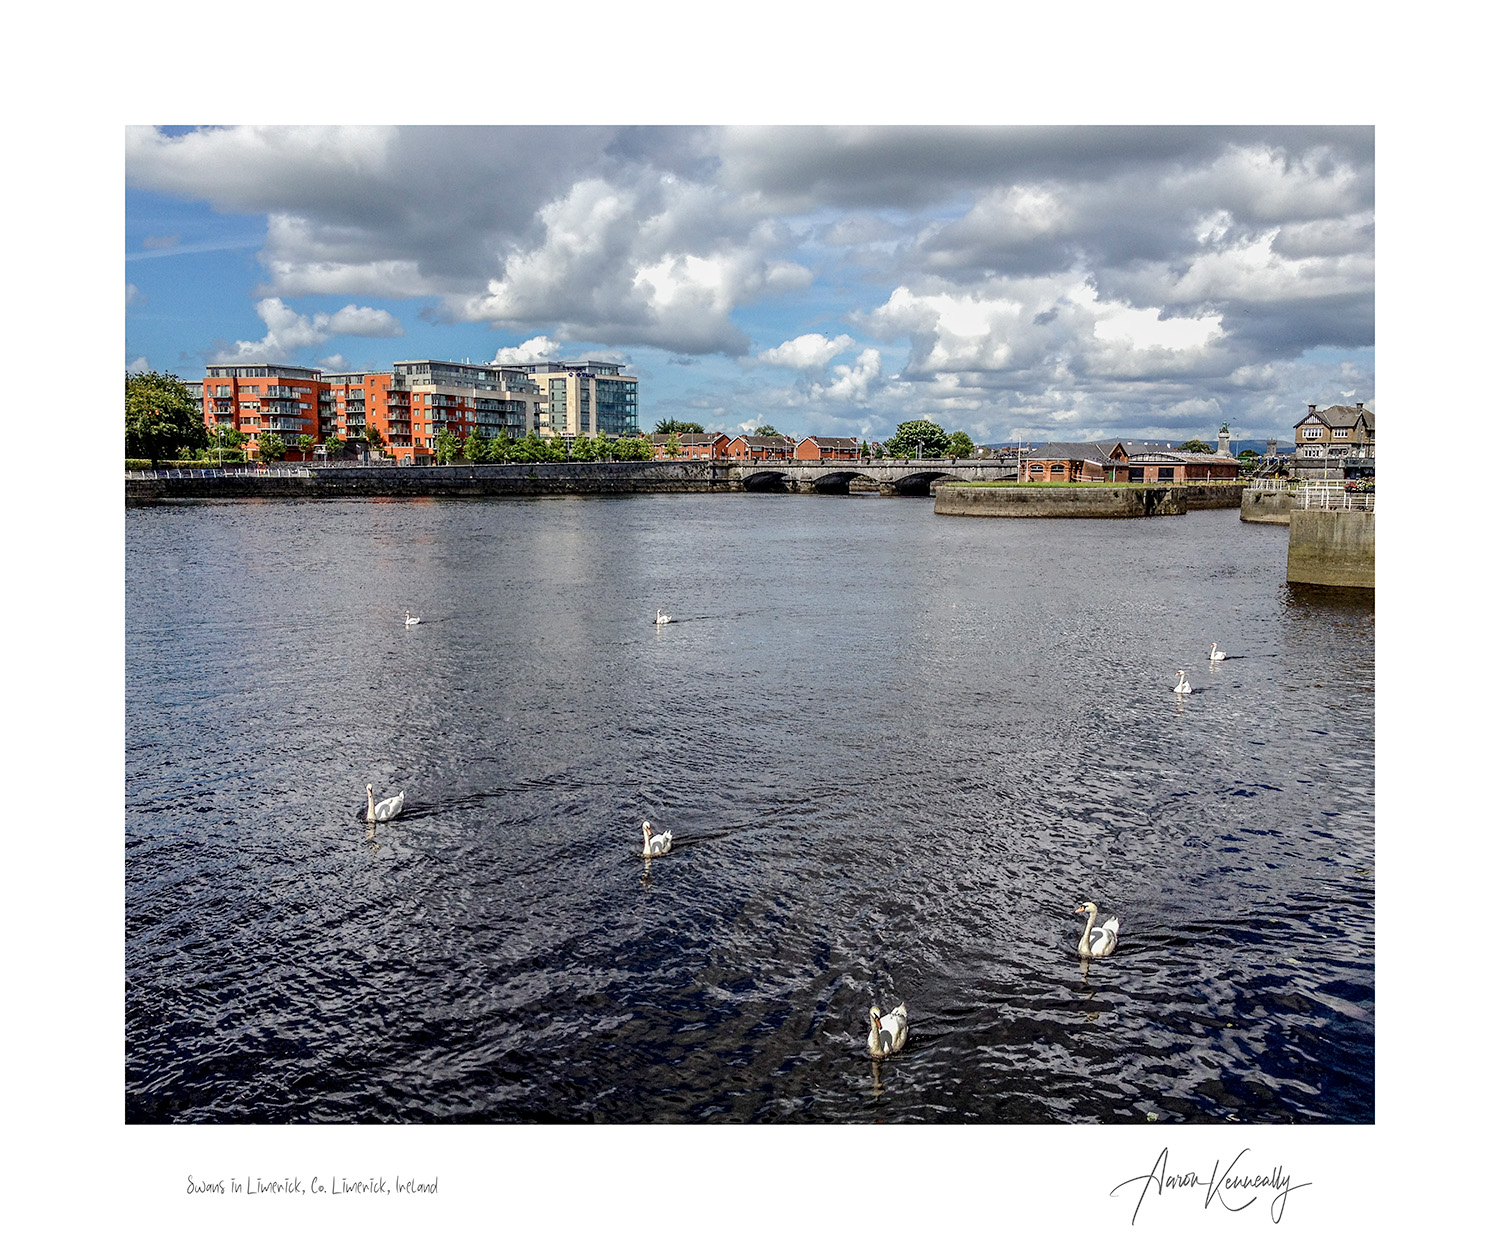 River Shannon, Co. Limerick, Ireland